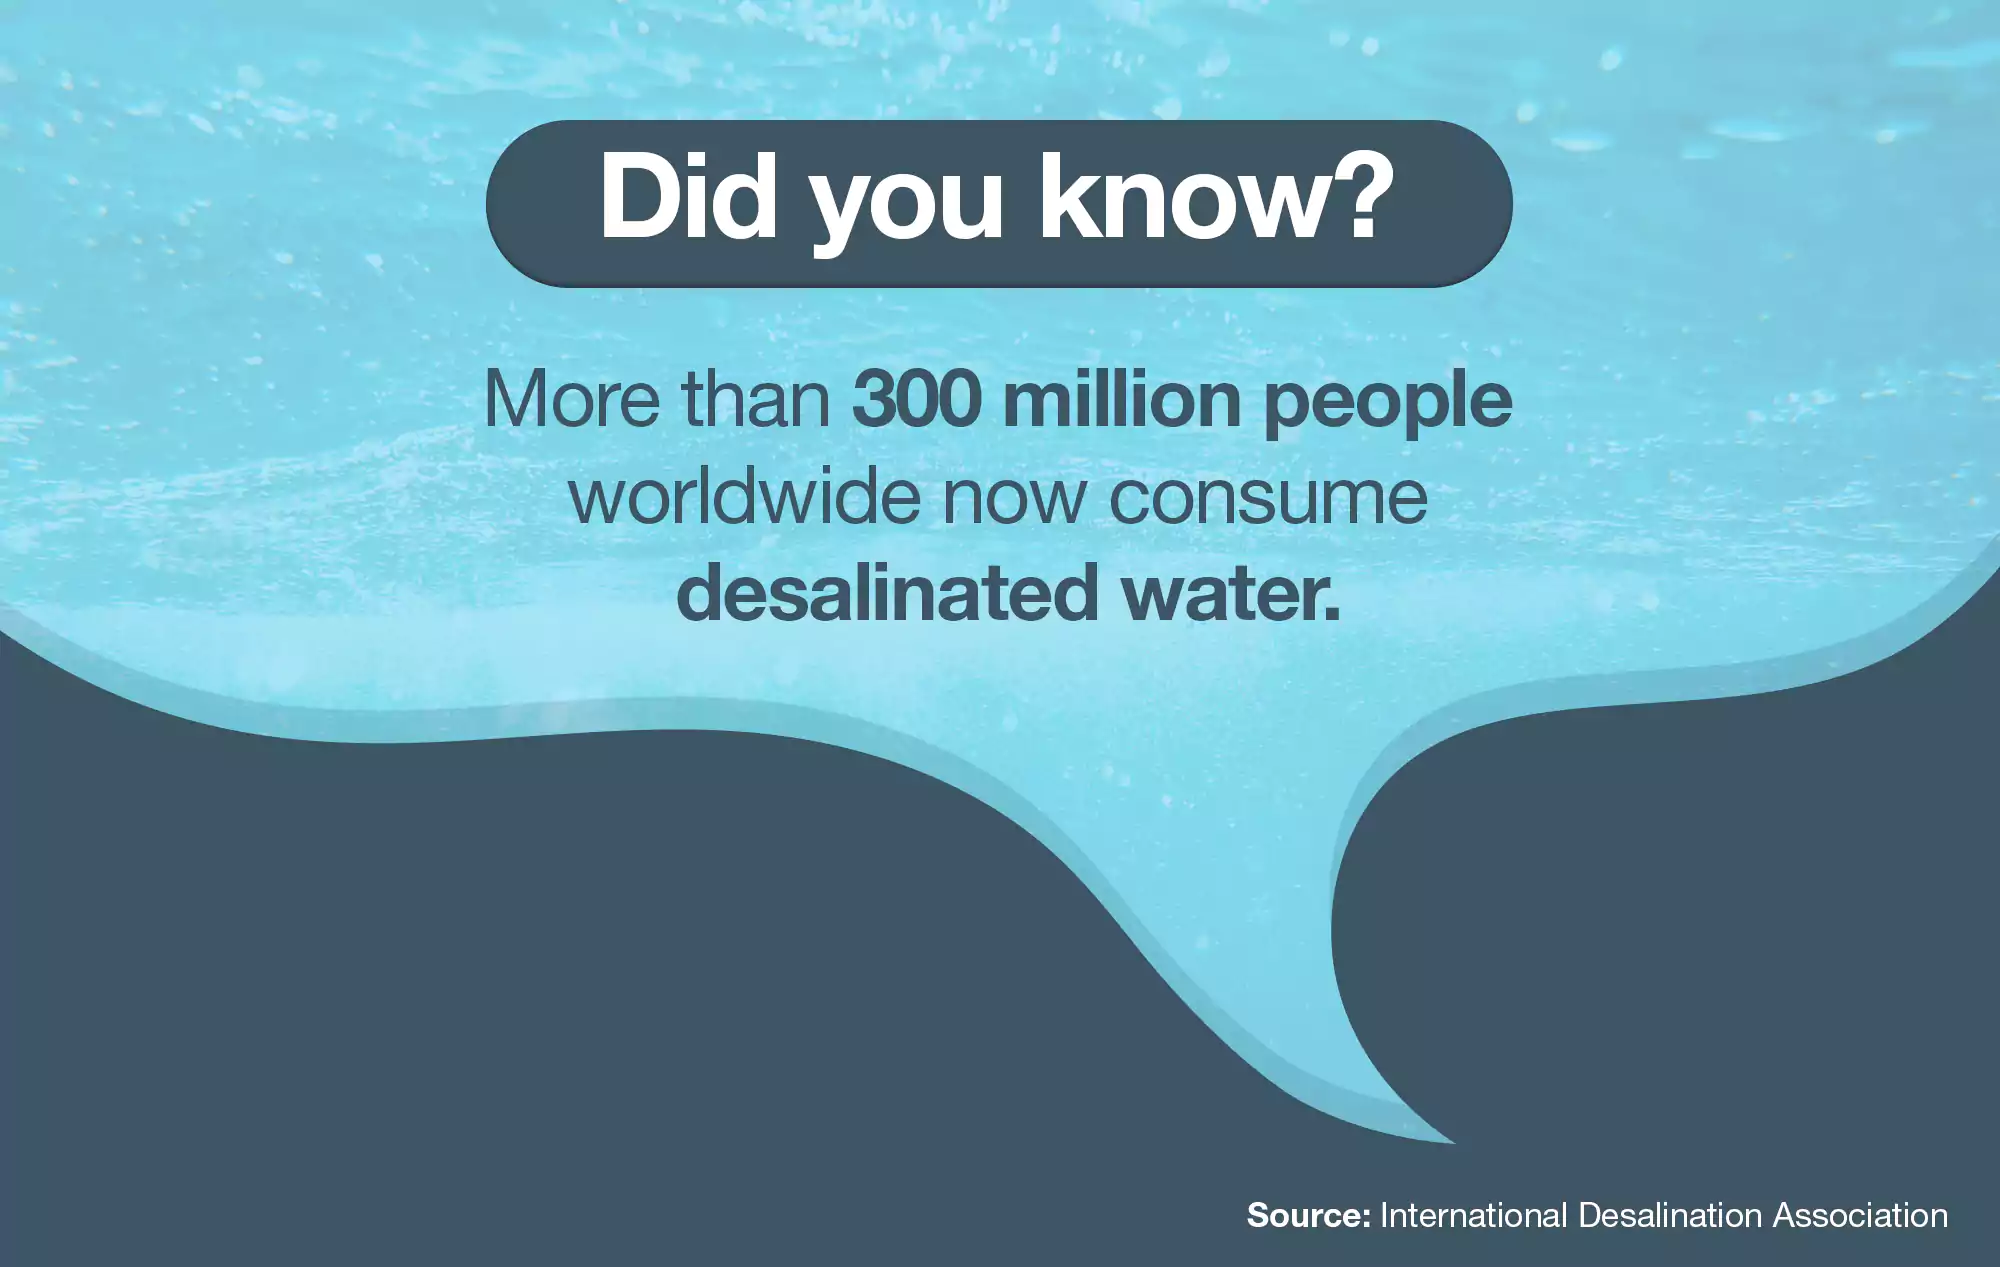 Desalinated water consumption